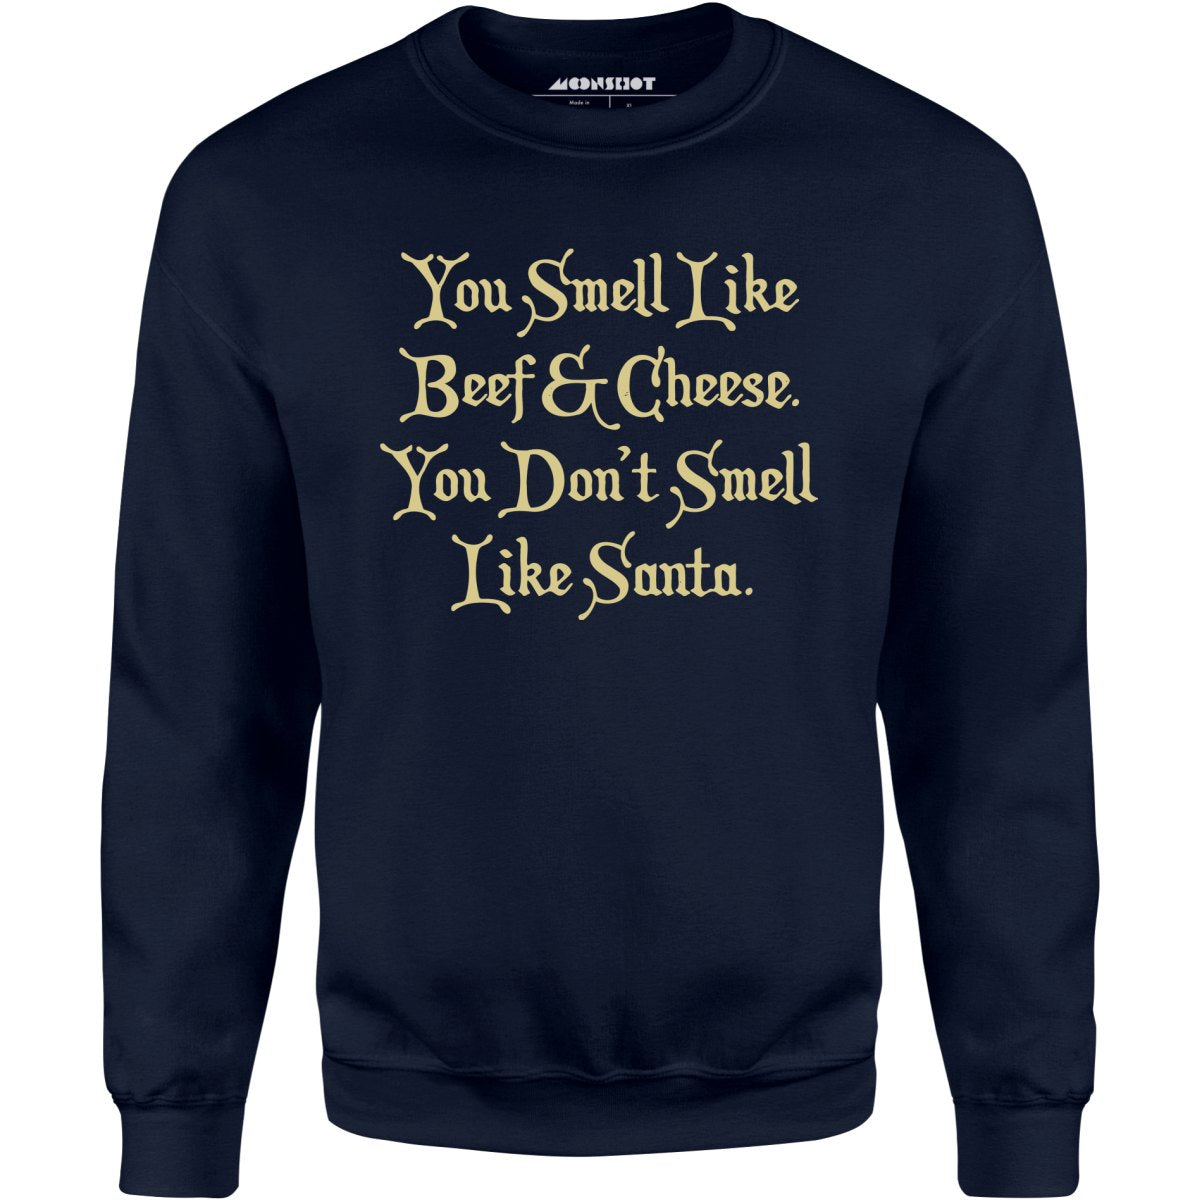 You Don't Smell Like Santa - Unisex Sweatshirt